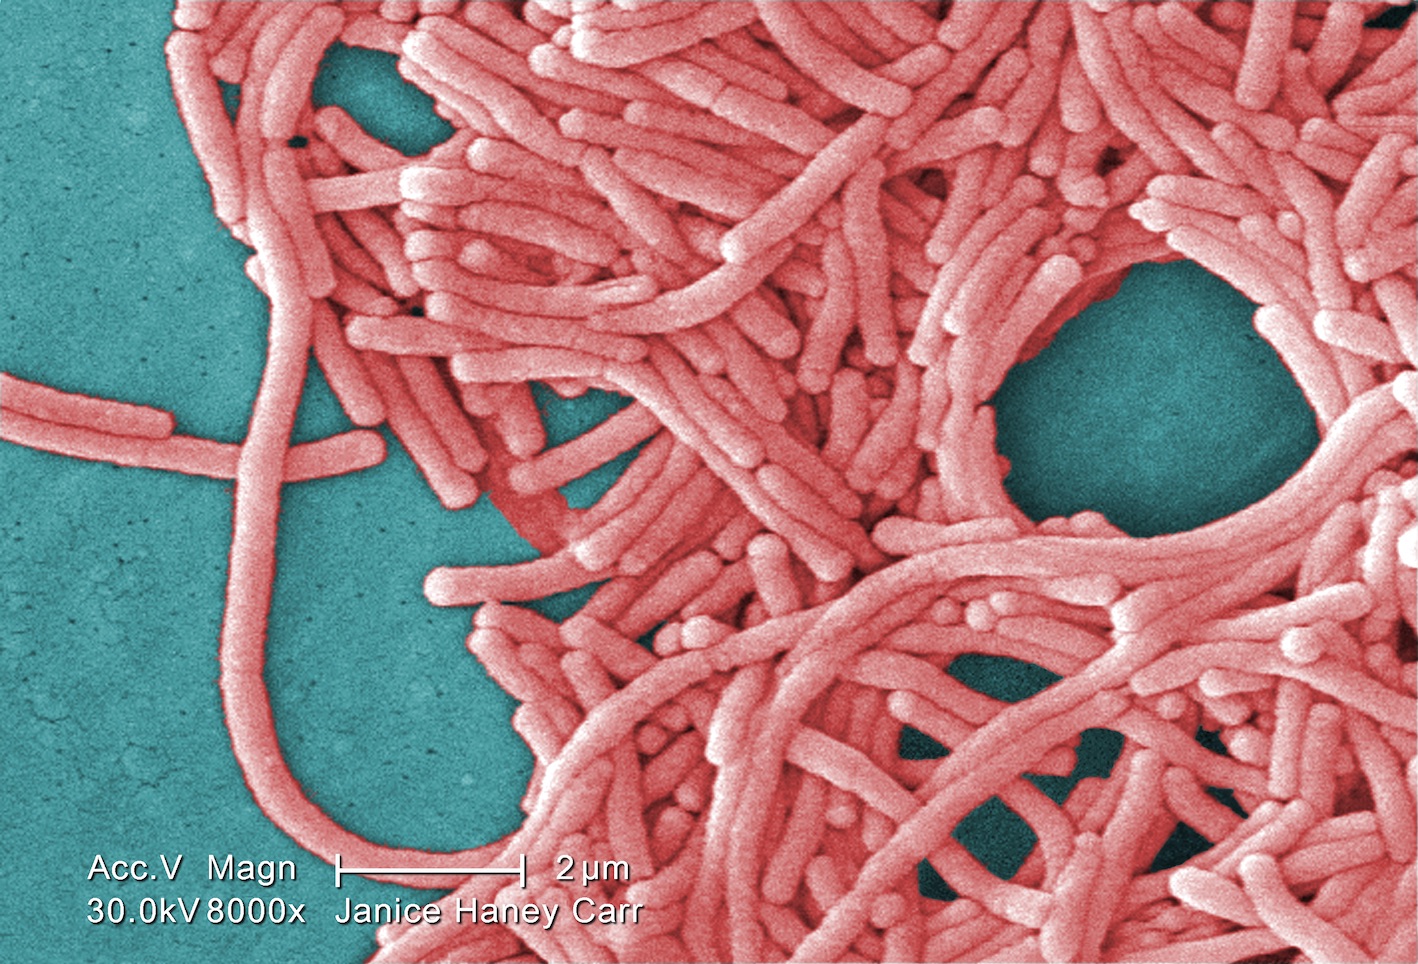 Gram-negative Legionella pneumophila bacteria (Janice Haney Carr, CDC)